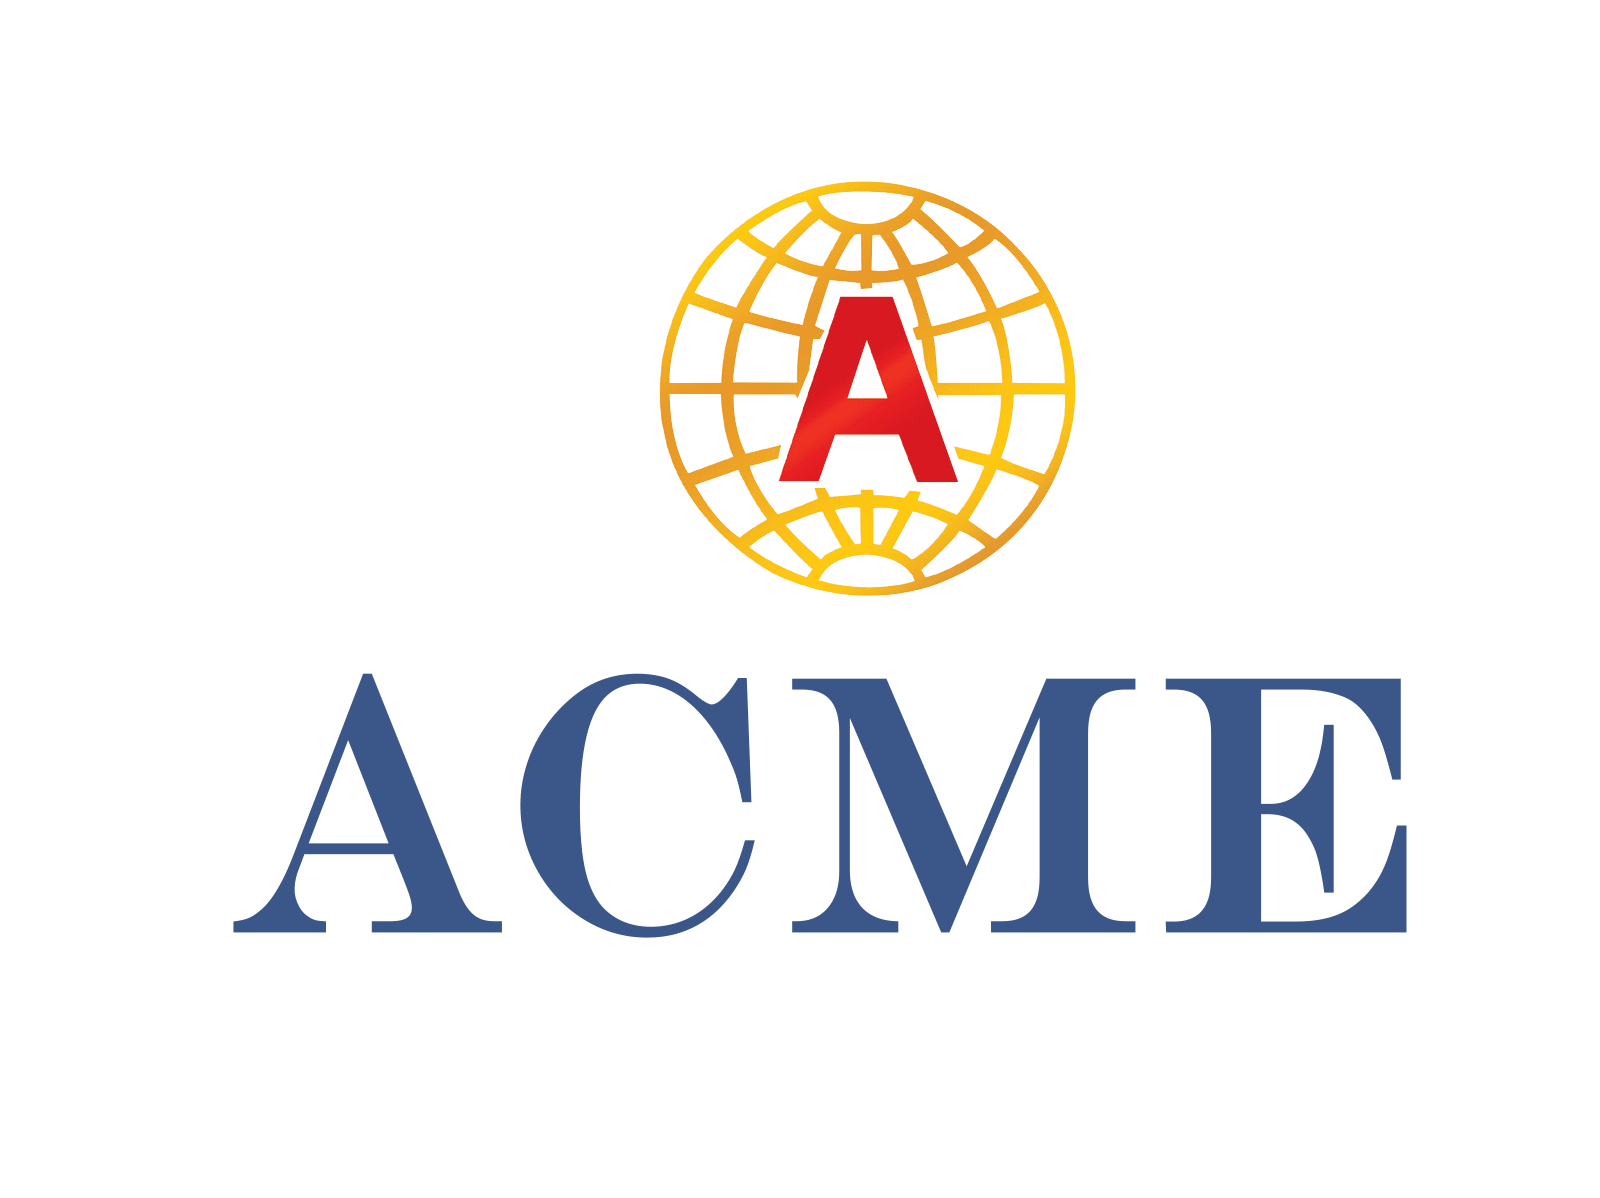 Acme Logo - Home page